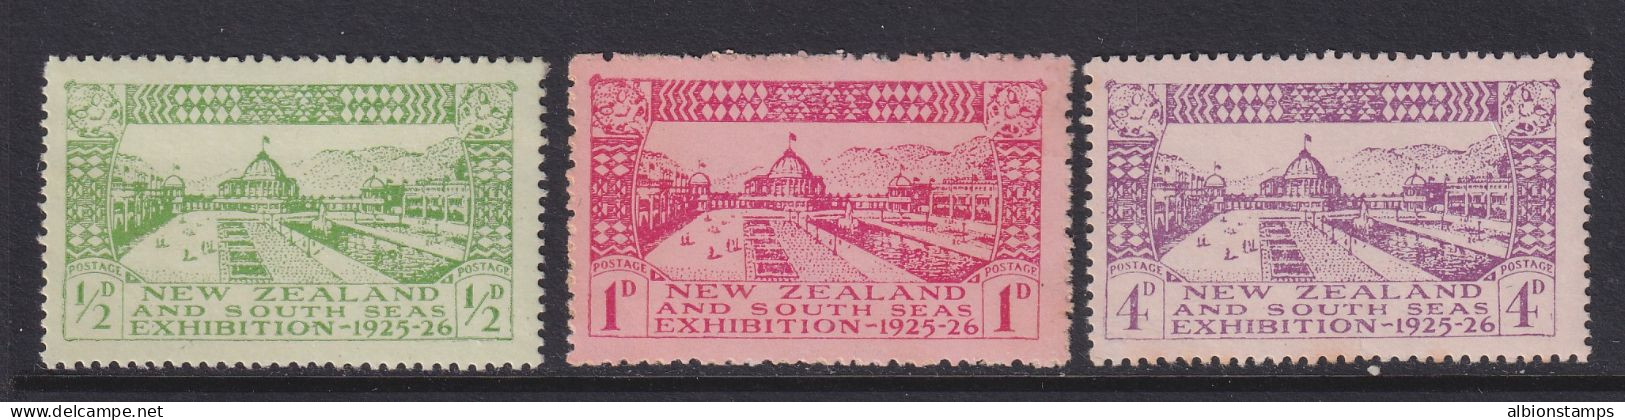 New Zealand, Scott 179-181 (SG 463-465), MLH (few Toned Spots) - Unused Stamps